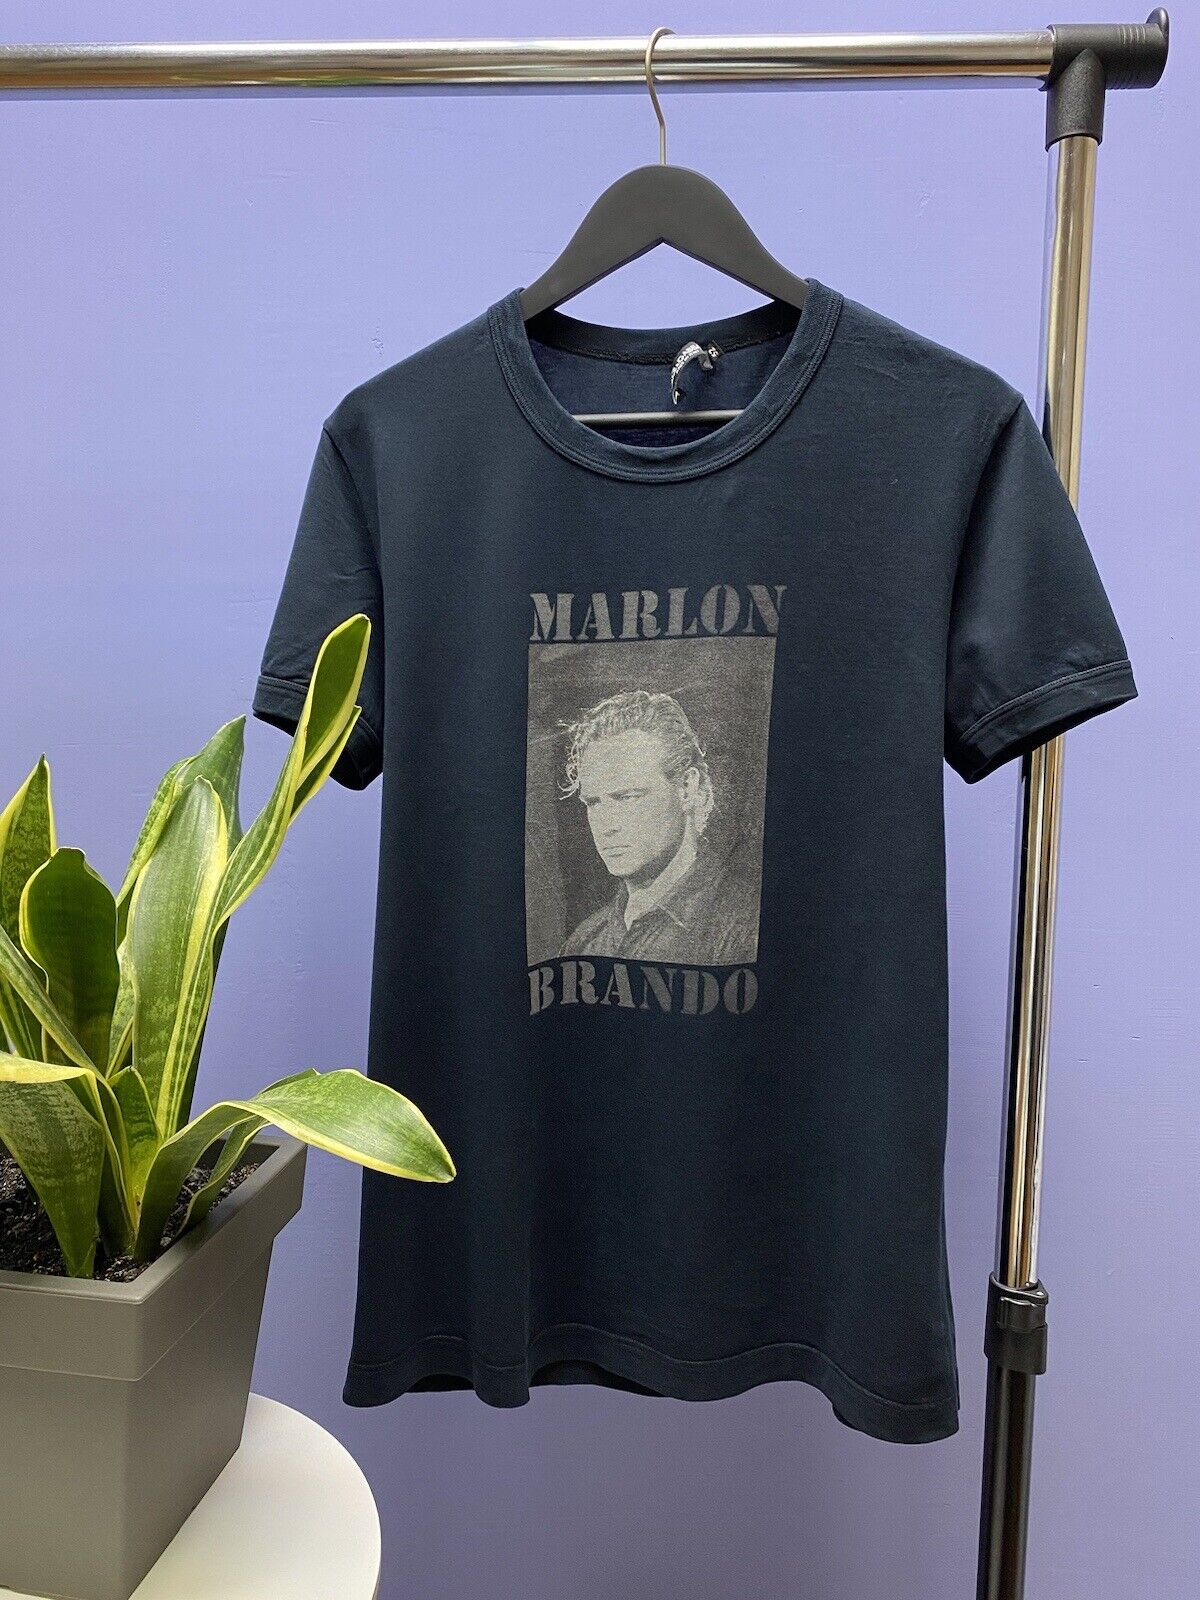 Dolce & Gabbana Marlon Brando Portrait Made In Italy T Shirt Size 52 Men